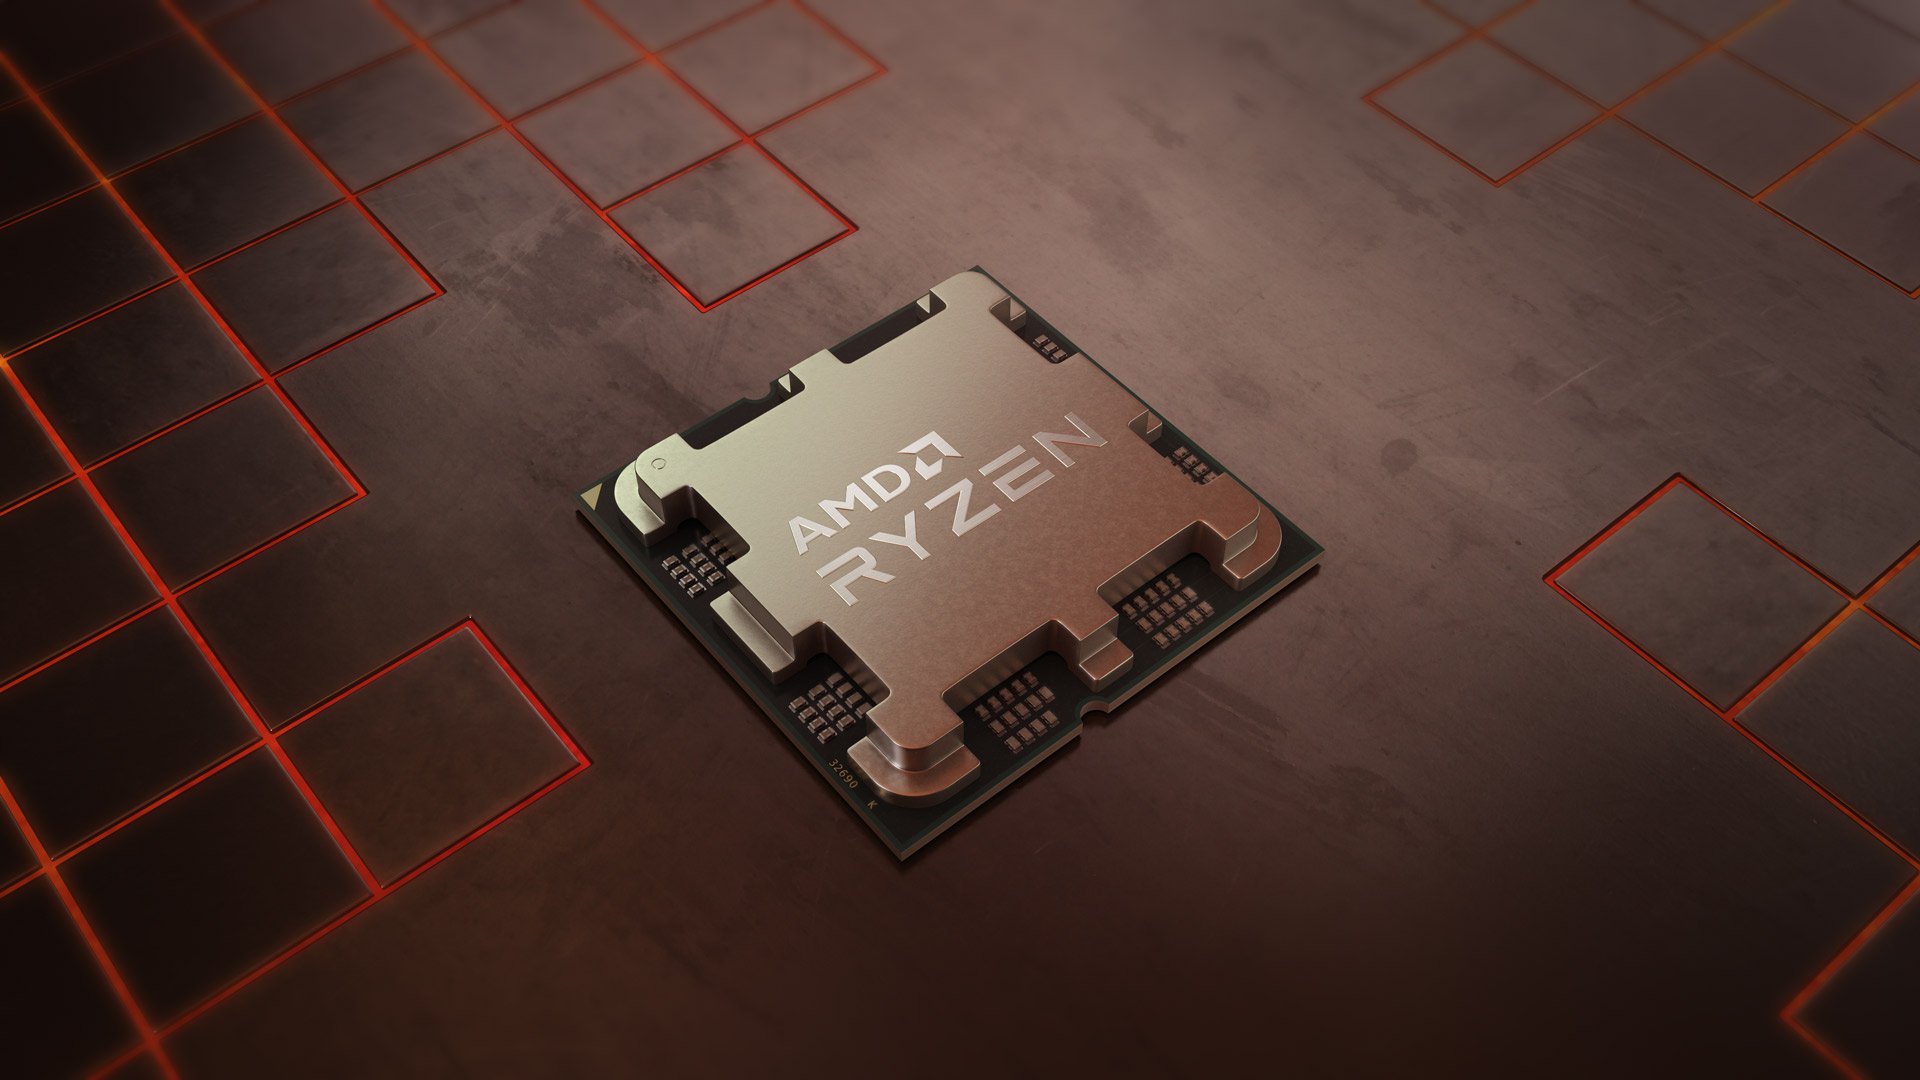 Intel Core i9-12900K allegedly scores 27% higher than Ryzen 9 5950X in  CPU-Z single-thread benchmark 